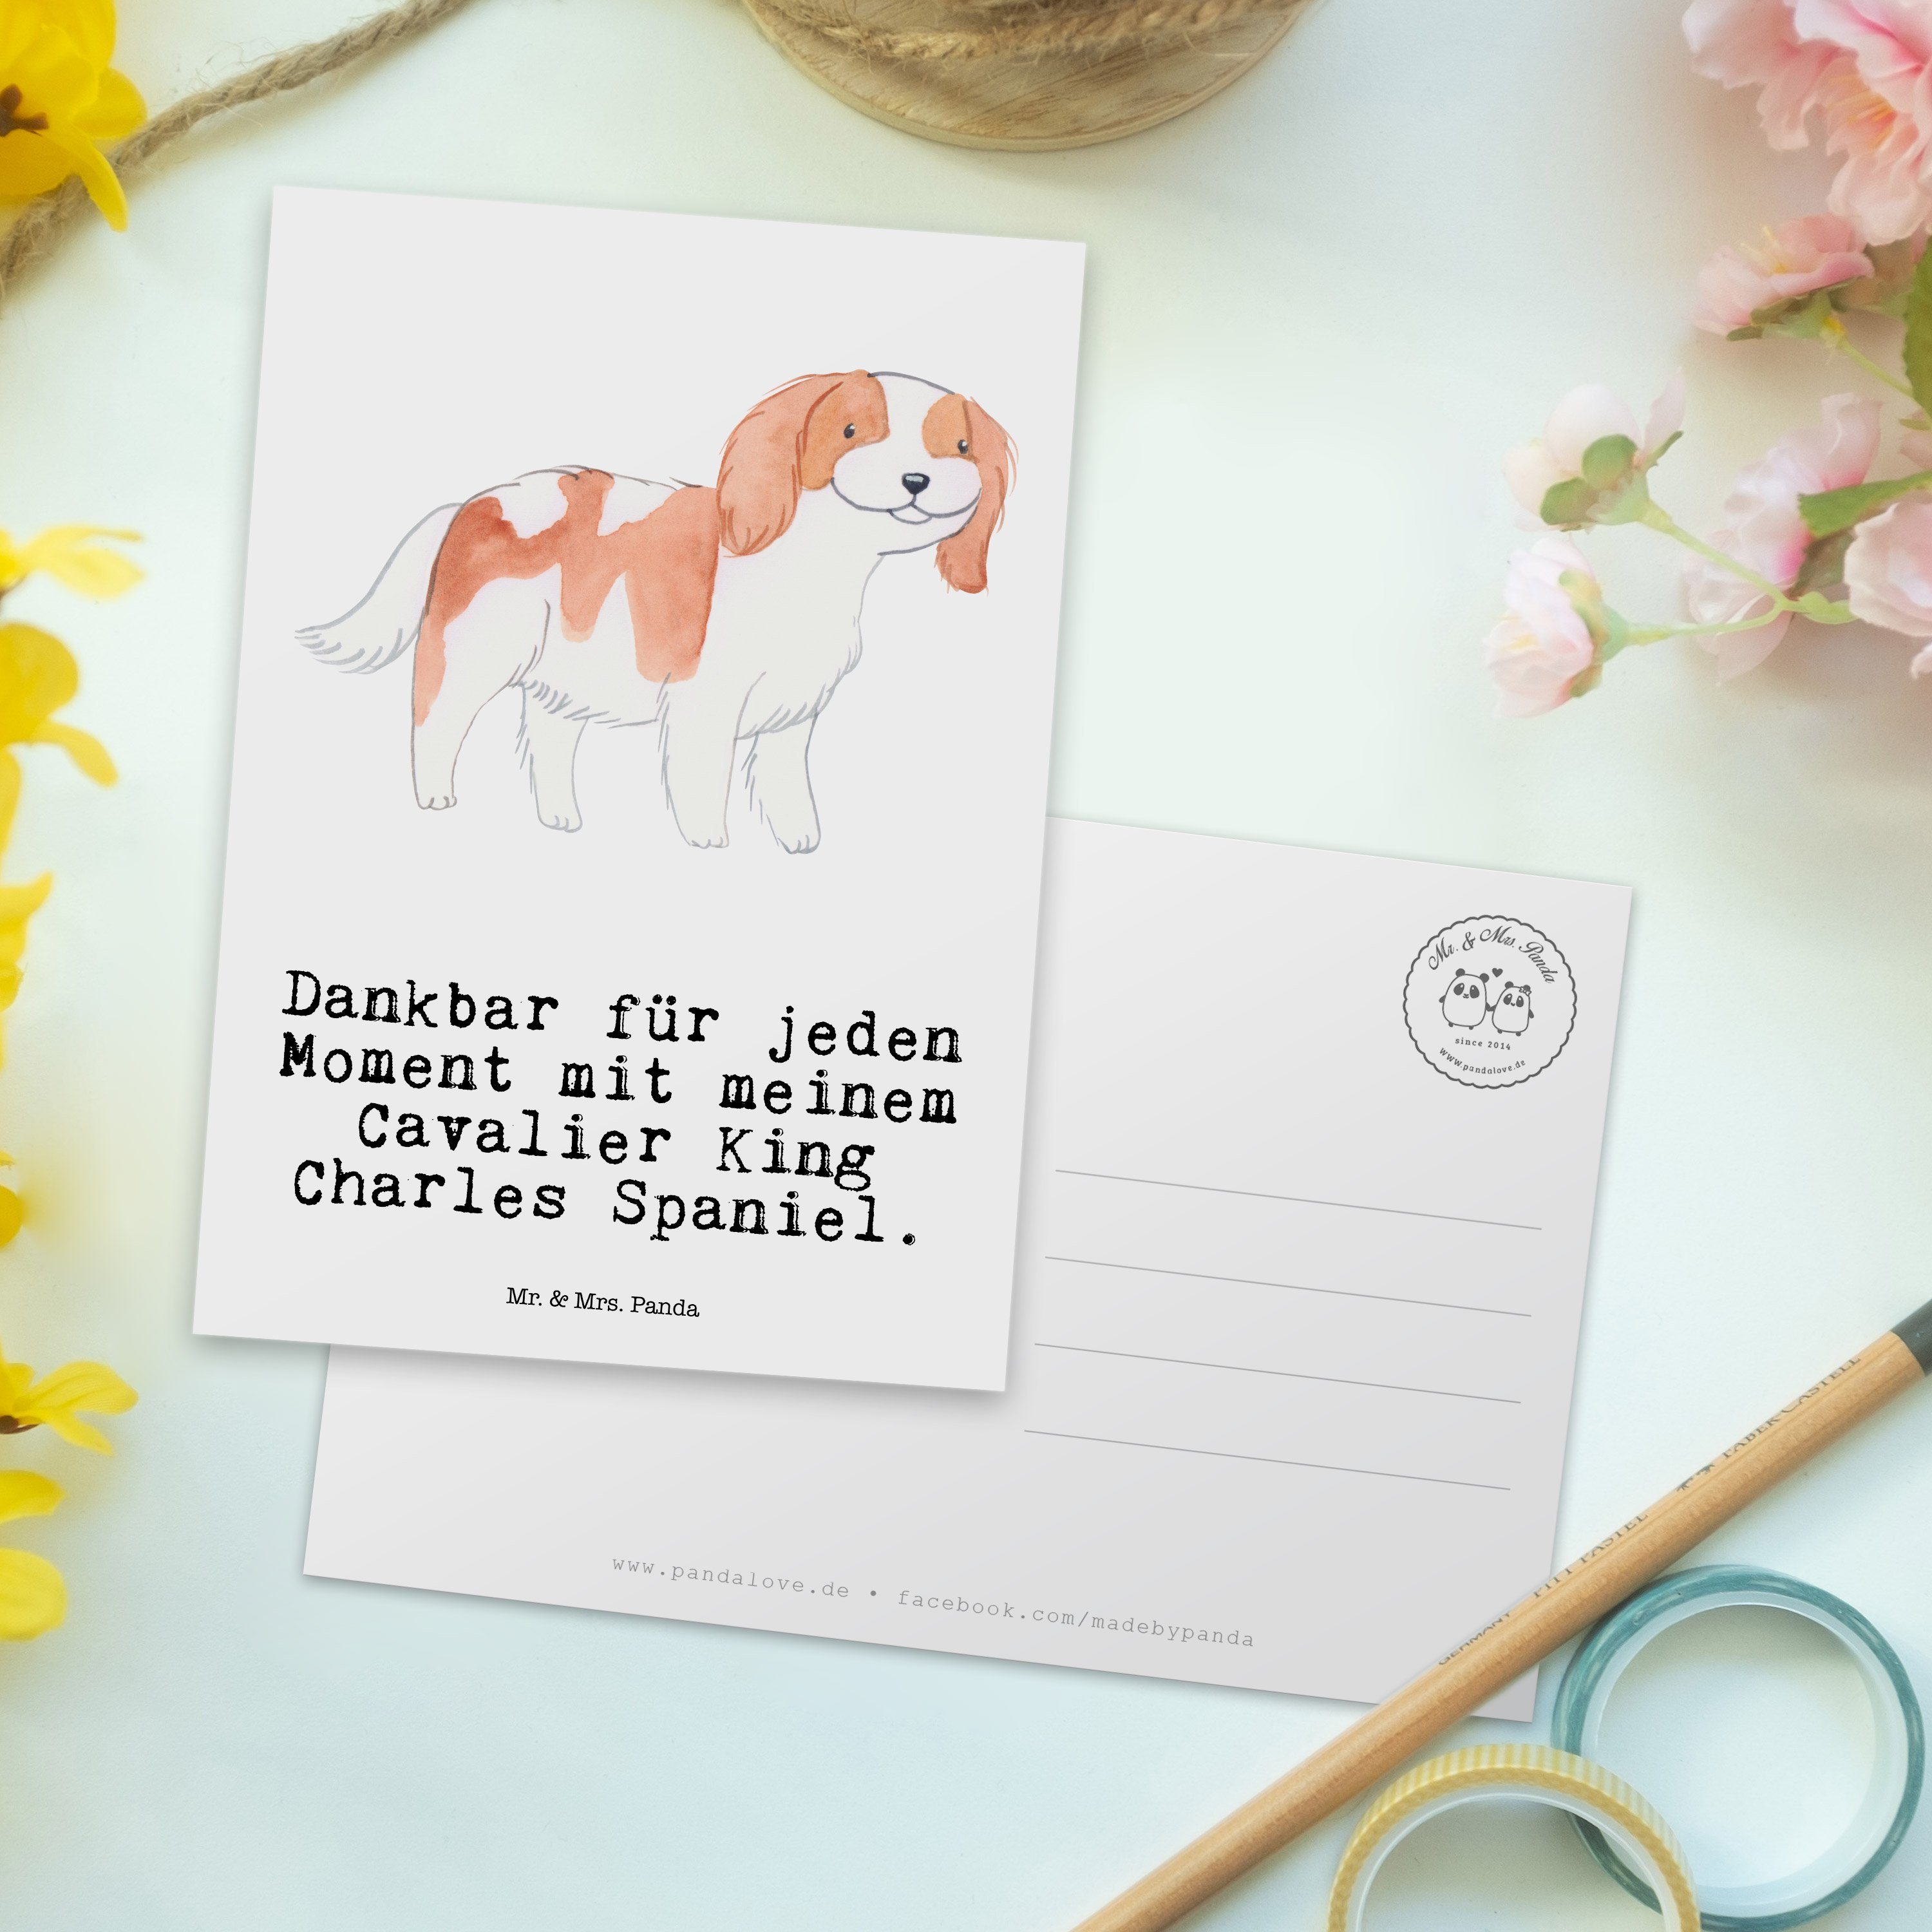 Mr. & Mrs. Panda Moment - King - Rassehu Charles Weiß Postkarte Hund, Cavalier Geschenk, Spaniel